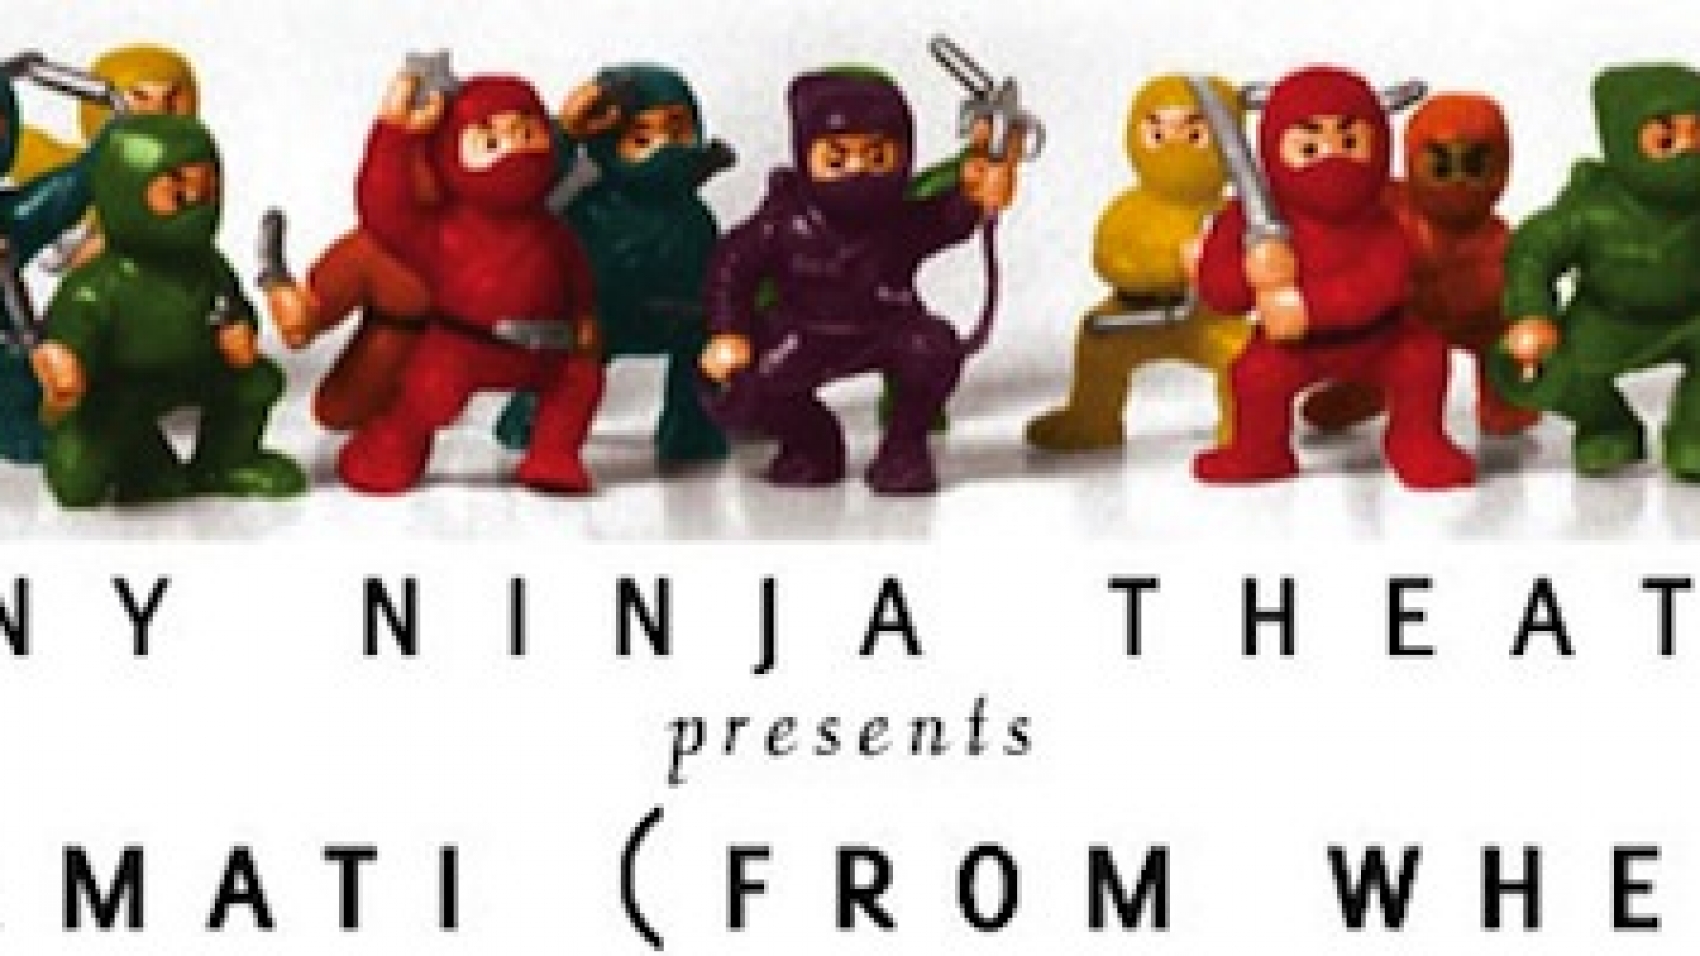 tiny ninja theater presents m'amati, from when? based on learning talmud via birkat chaverim